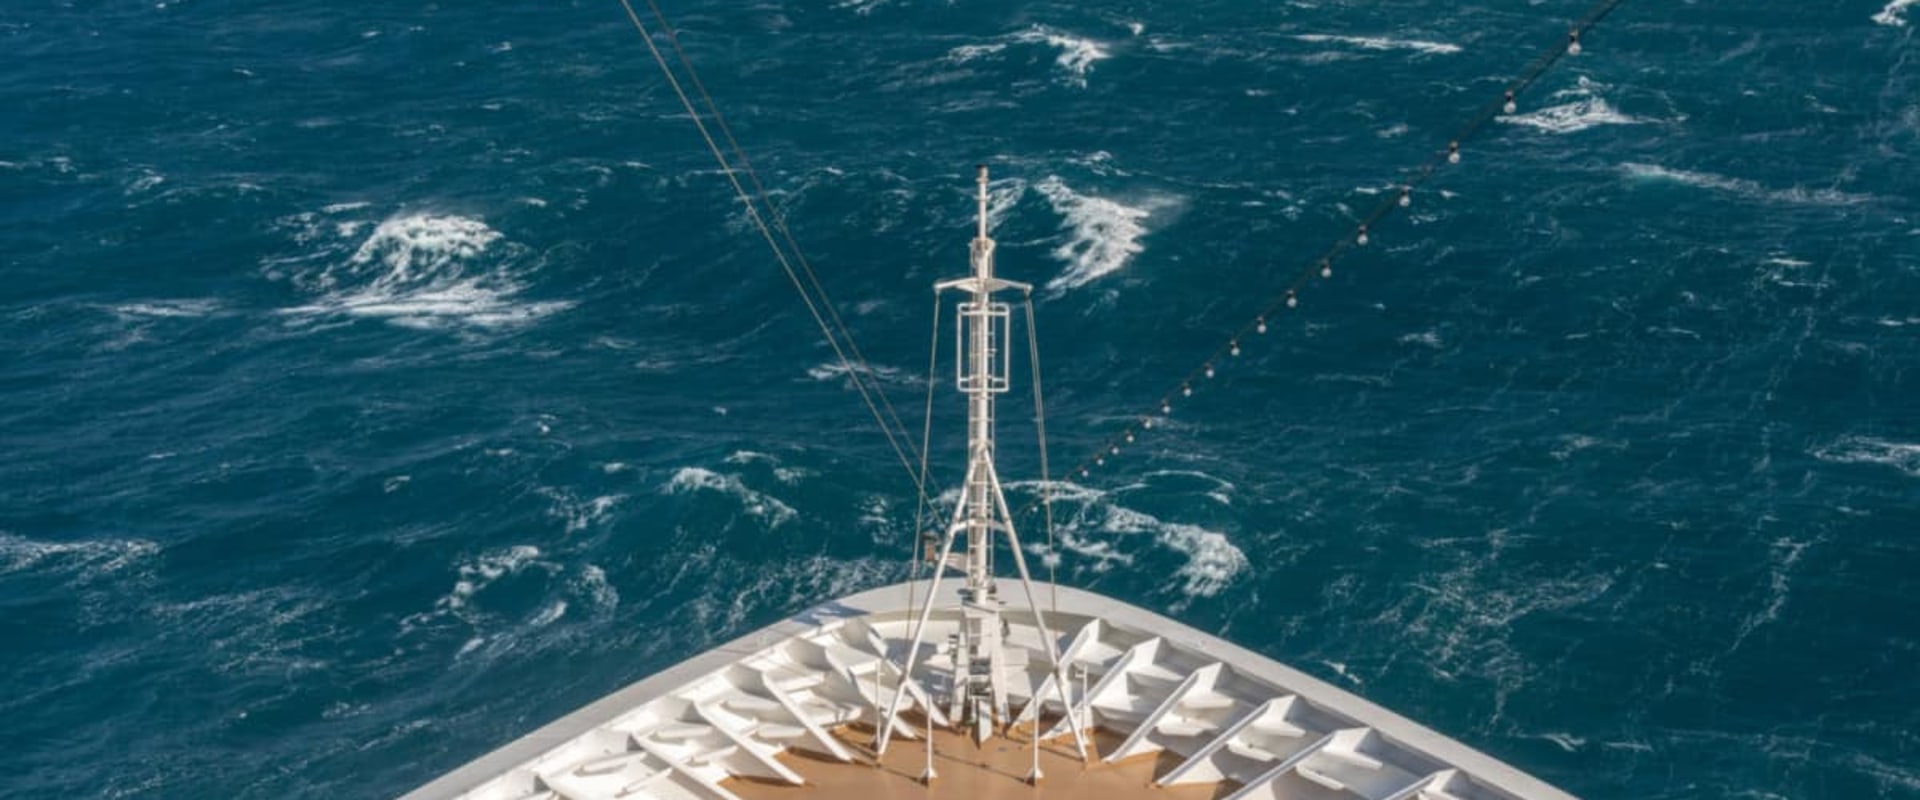 How do ships handle rough seas?